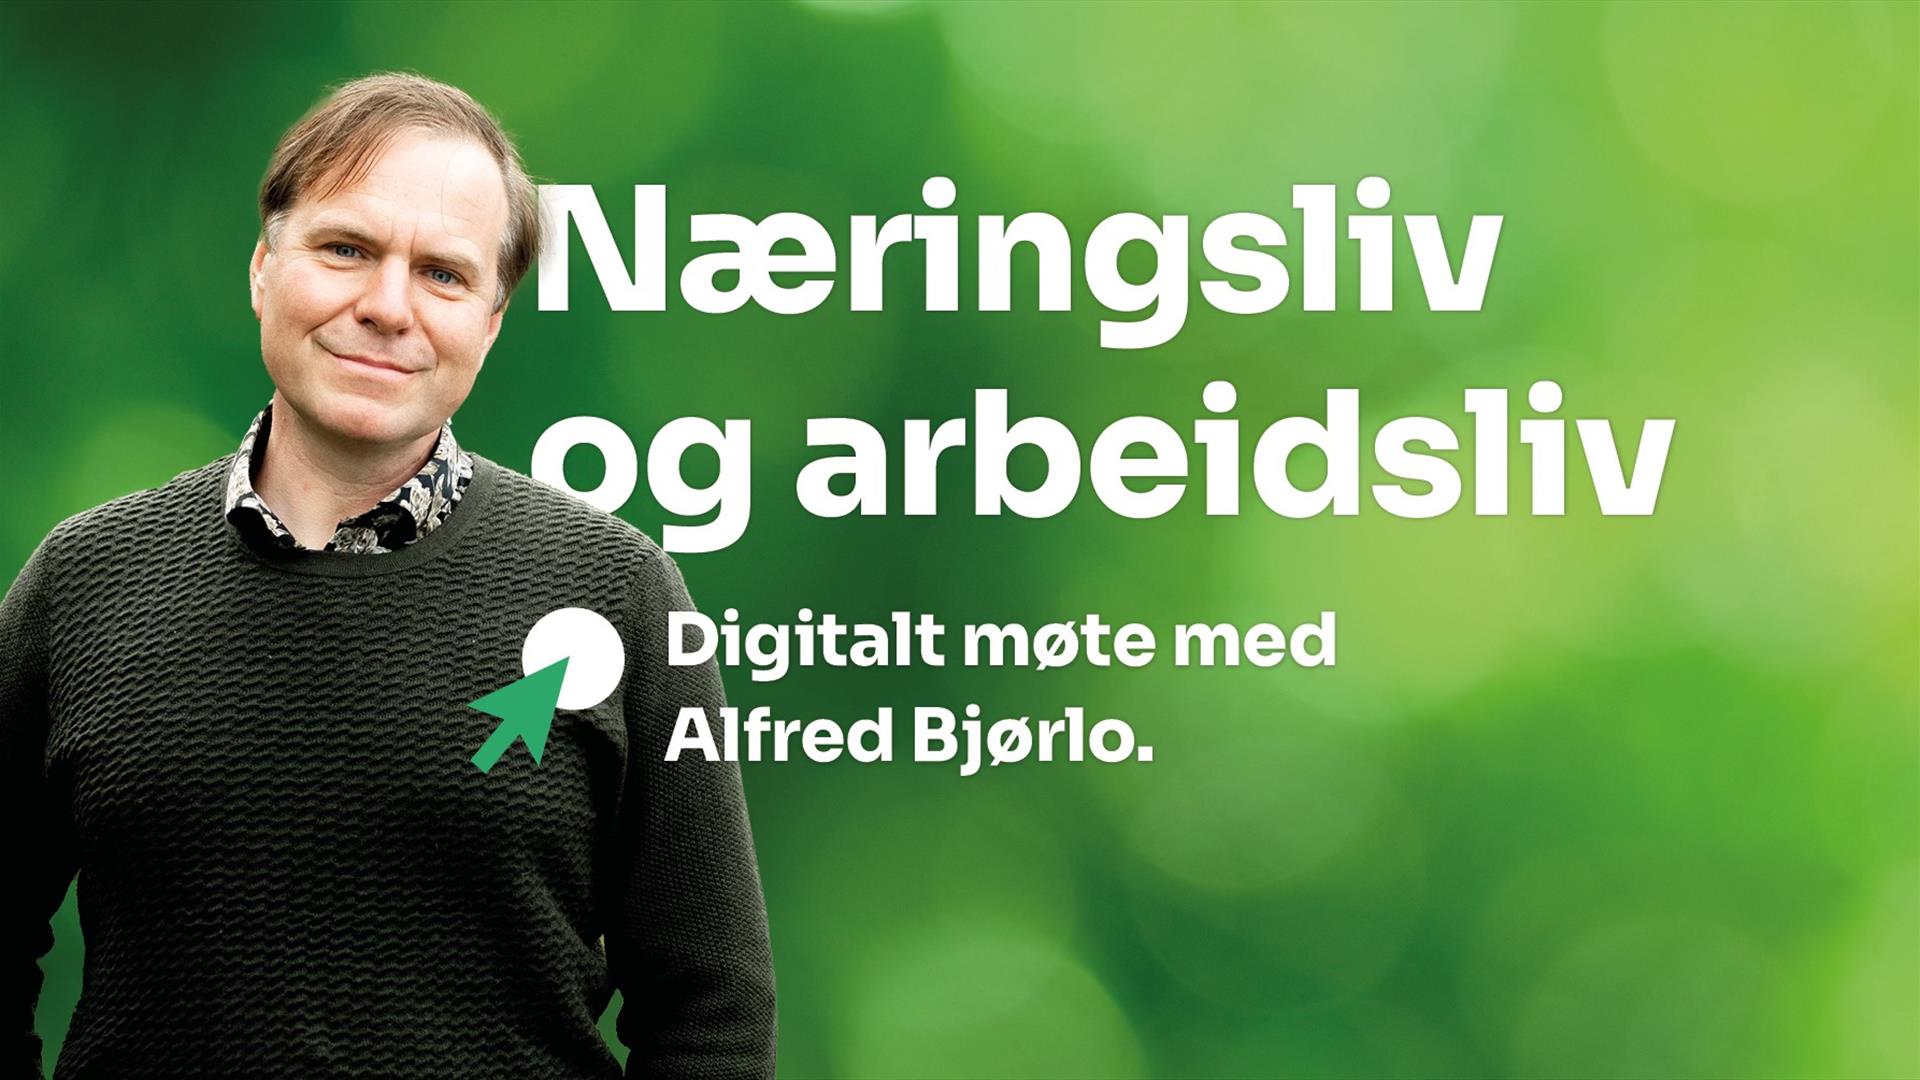 Alfred Bjørlo